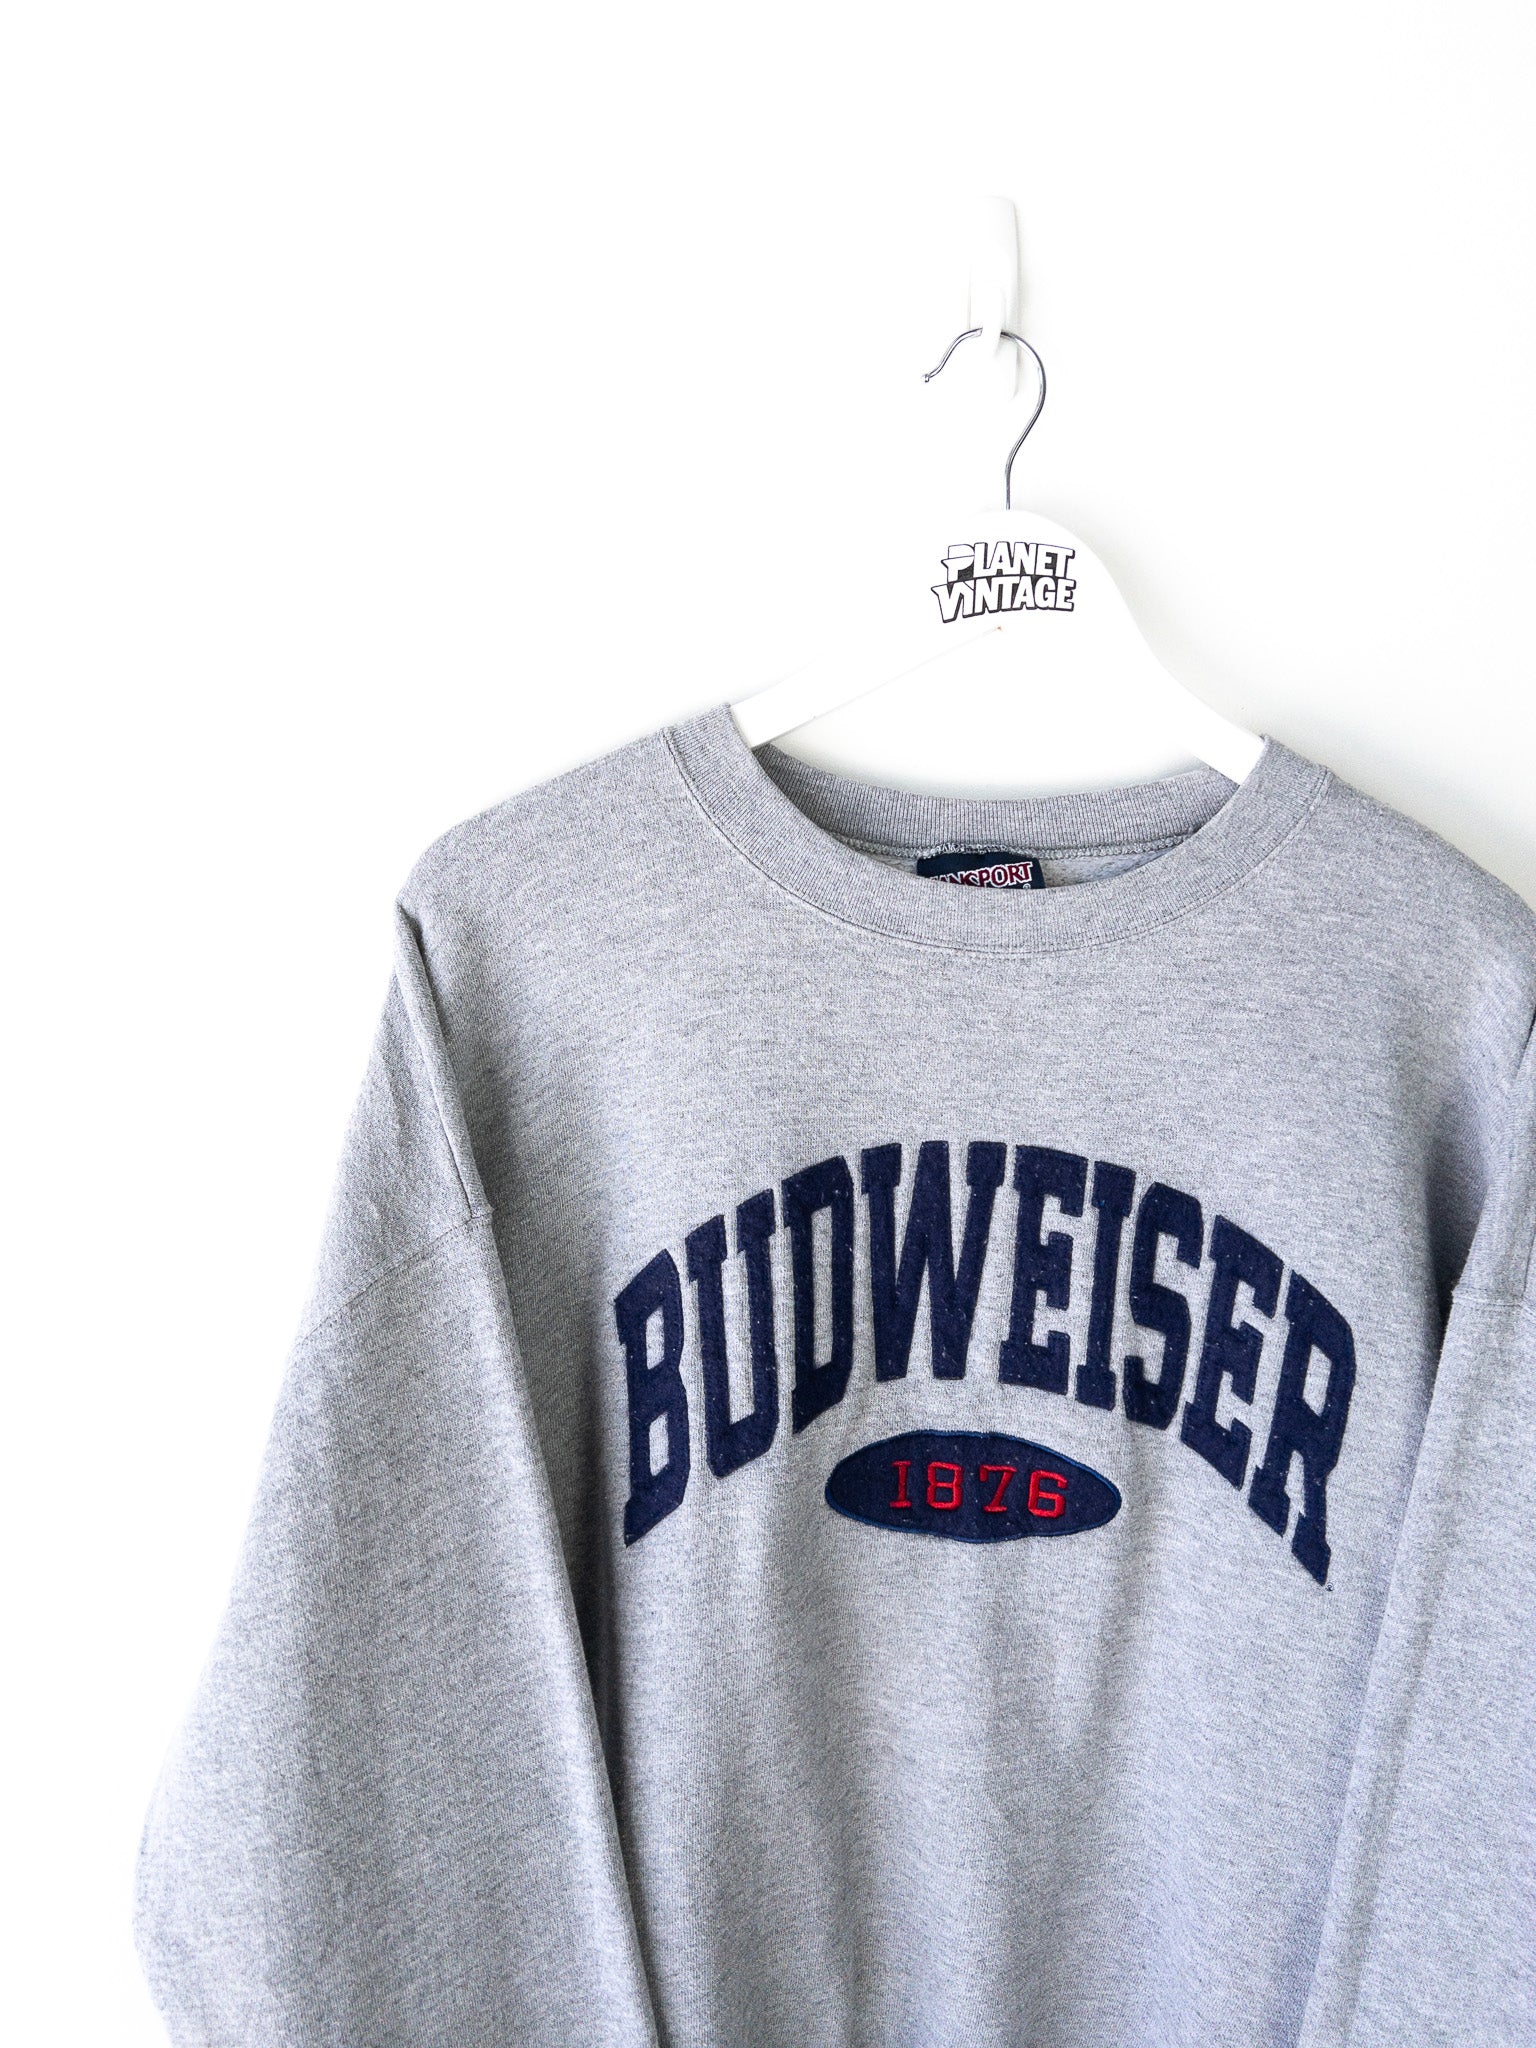 Vintage Budweiser Sweatshirt (XL)